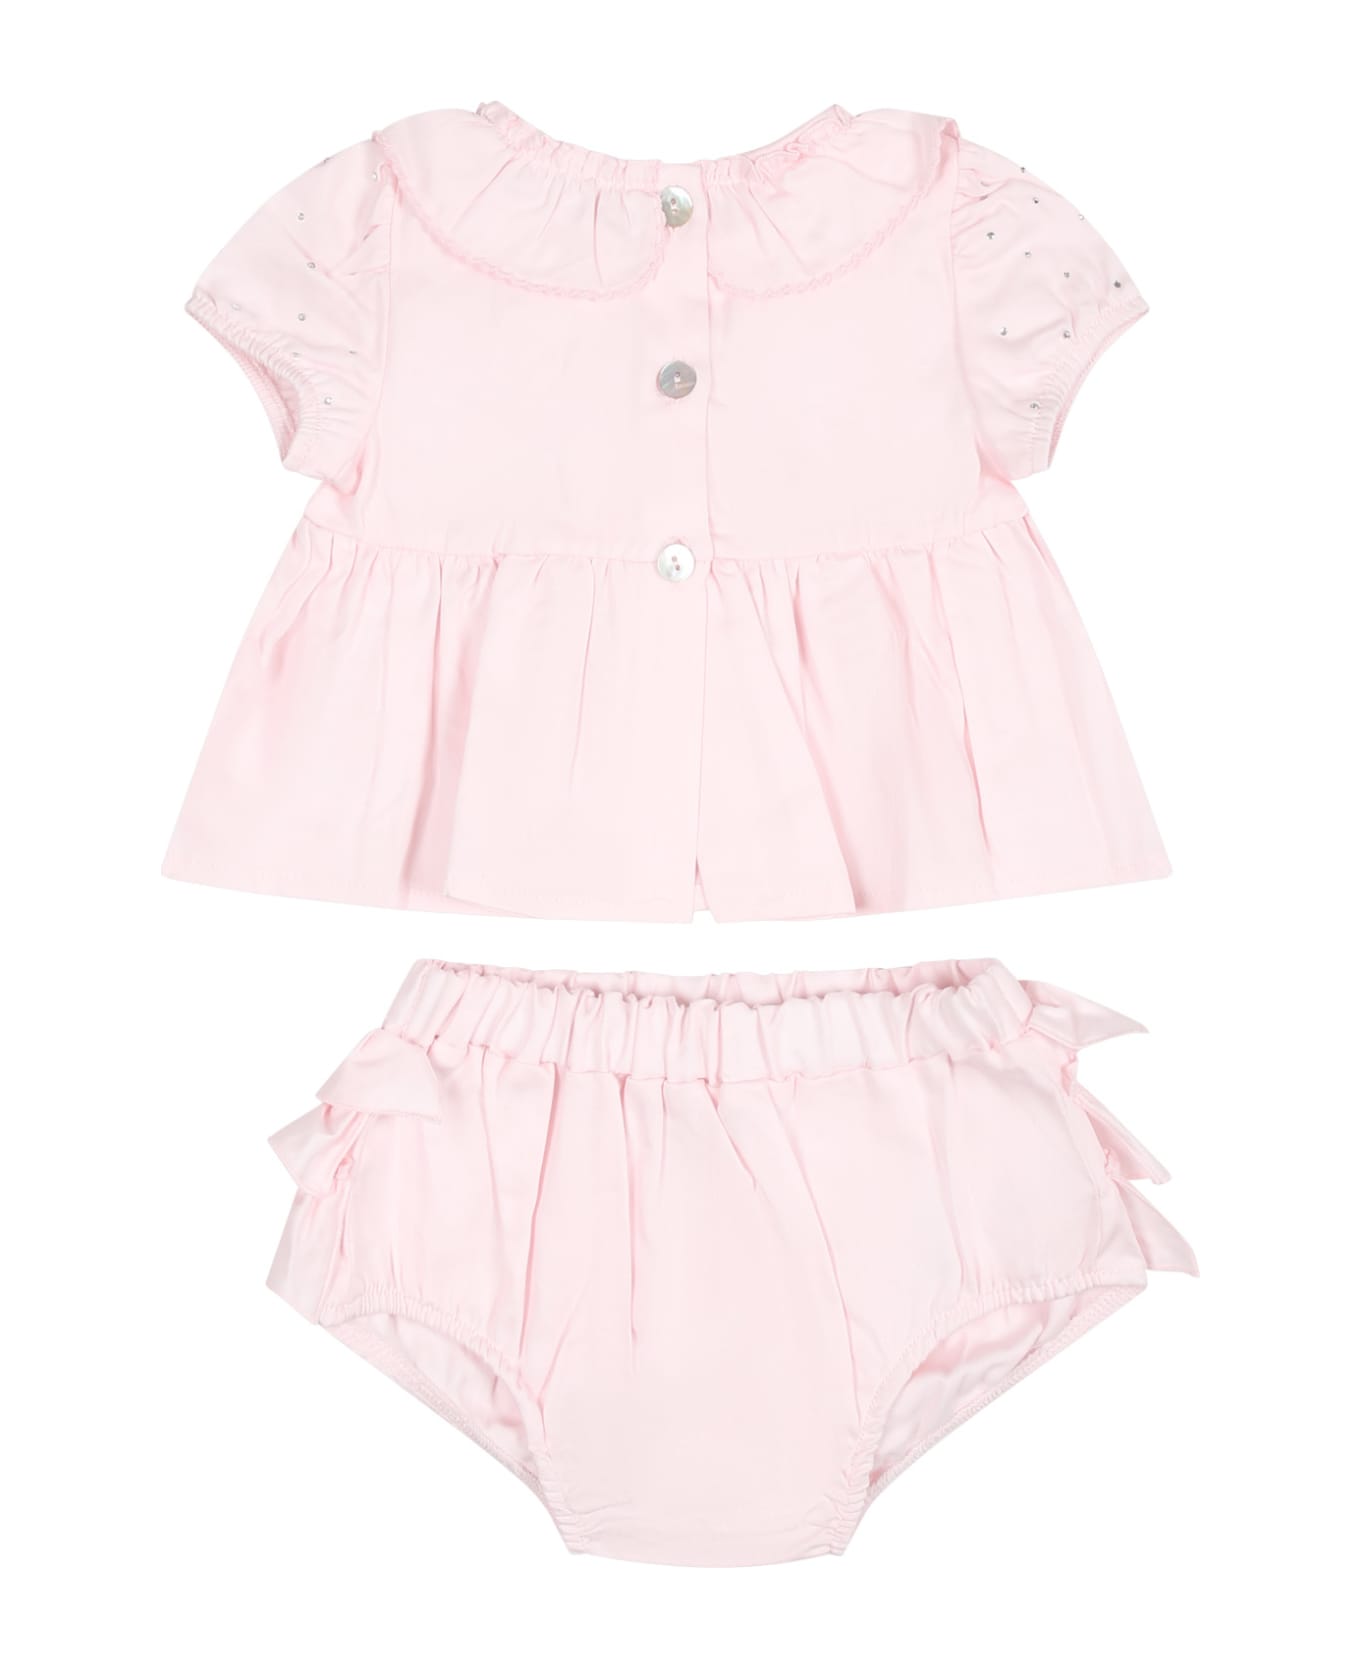 Monnalisa Pink Dress For Baby Girl With Rhinestones - Pink ウェア